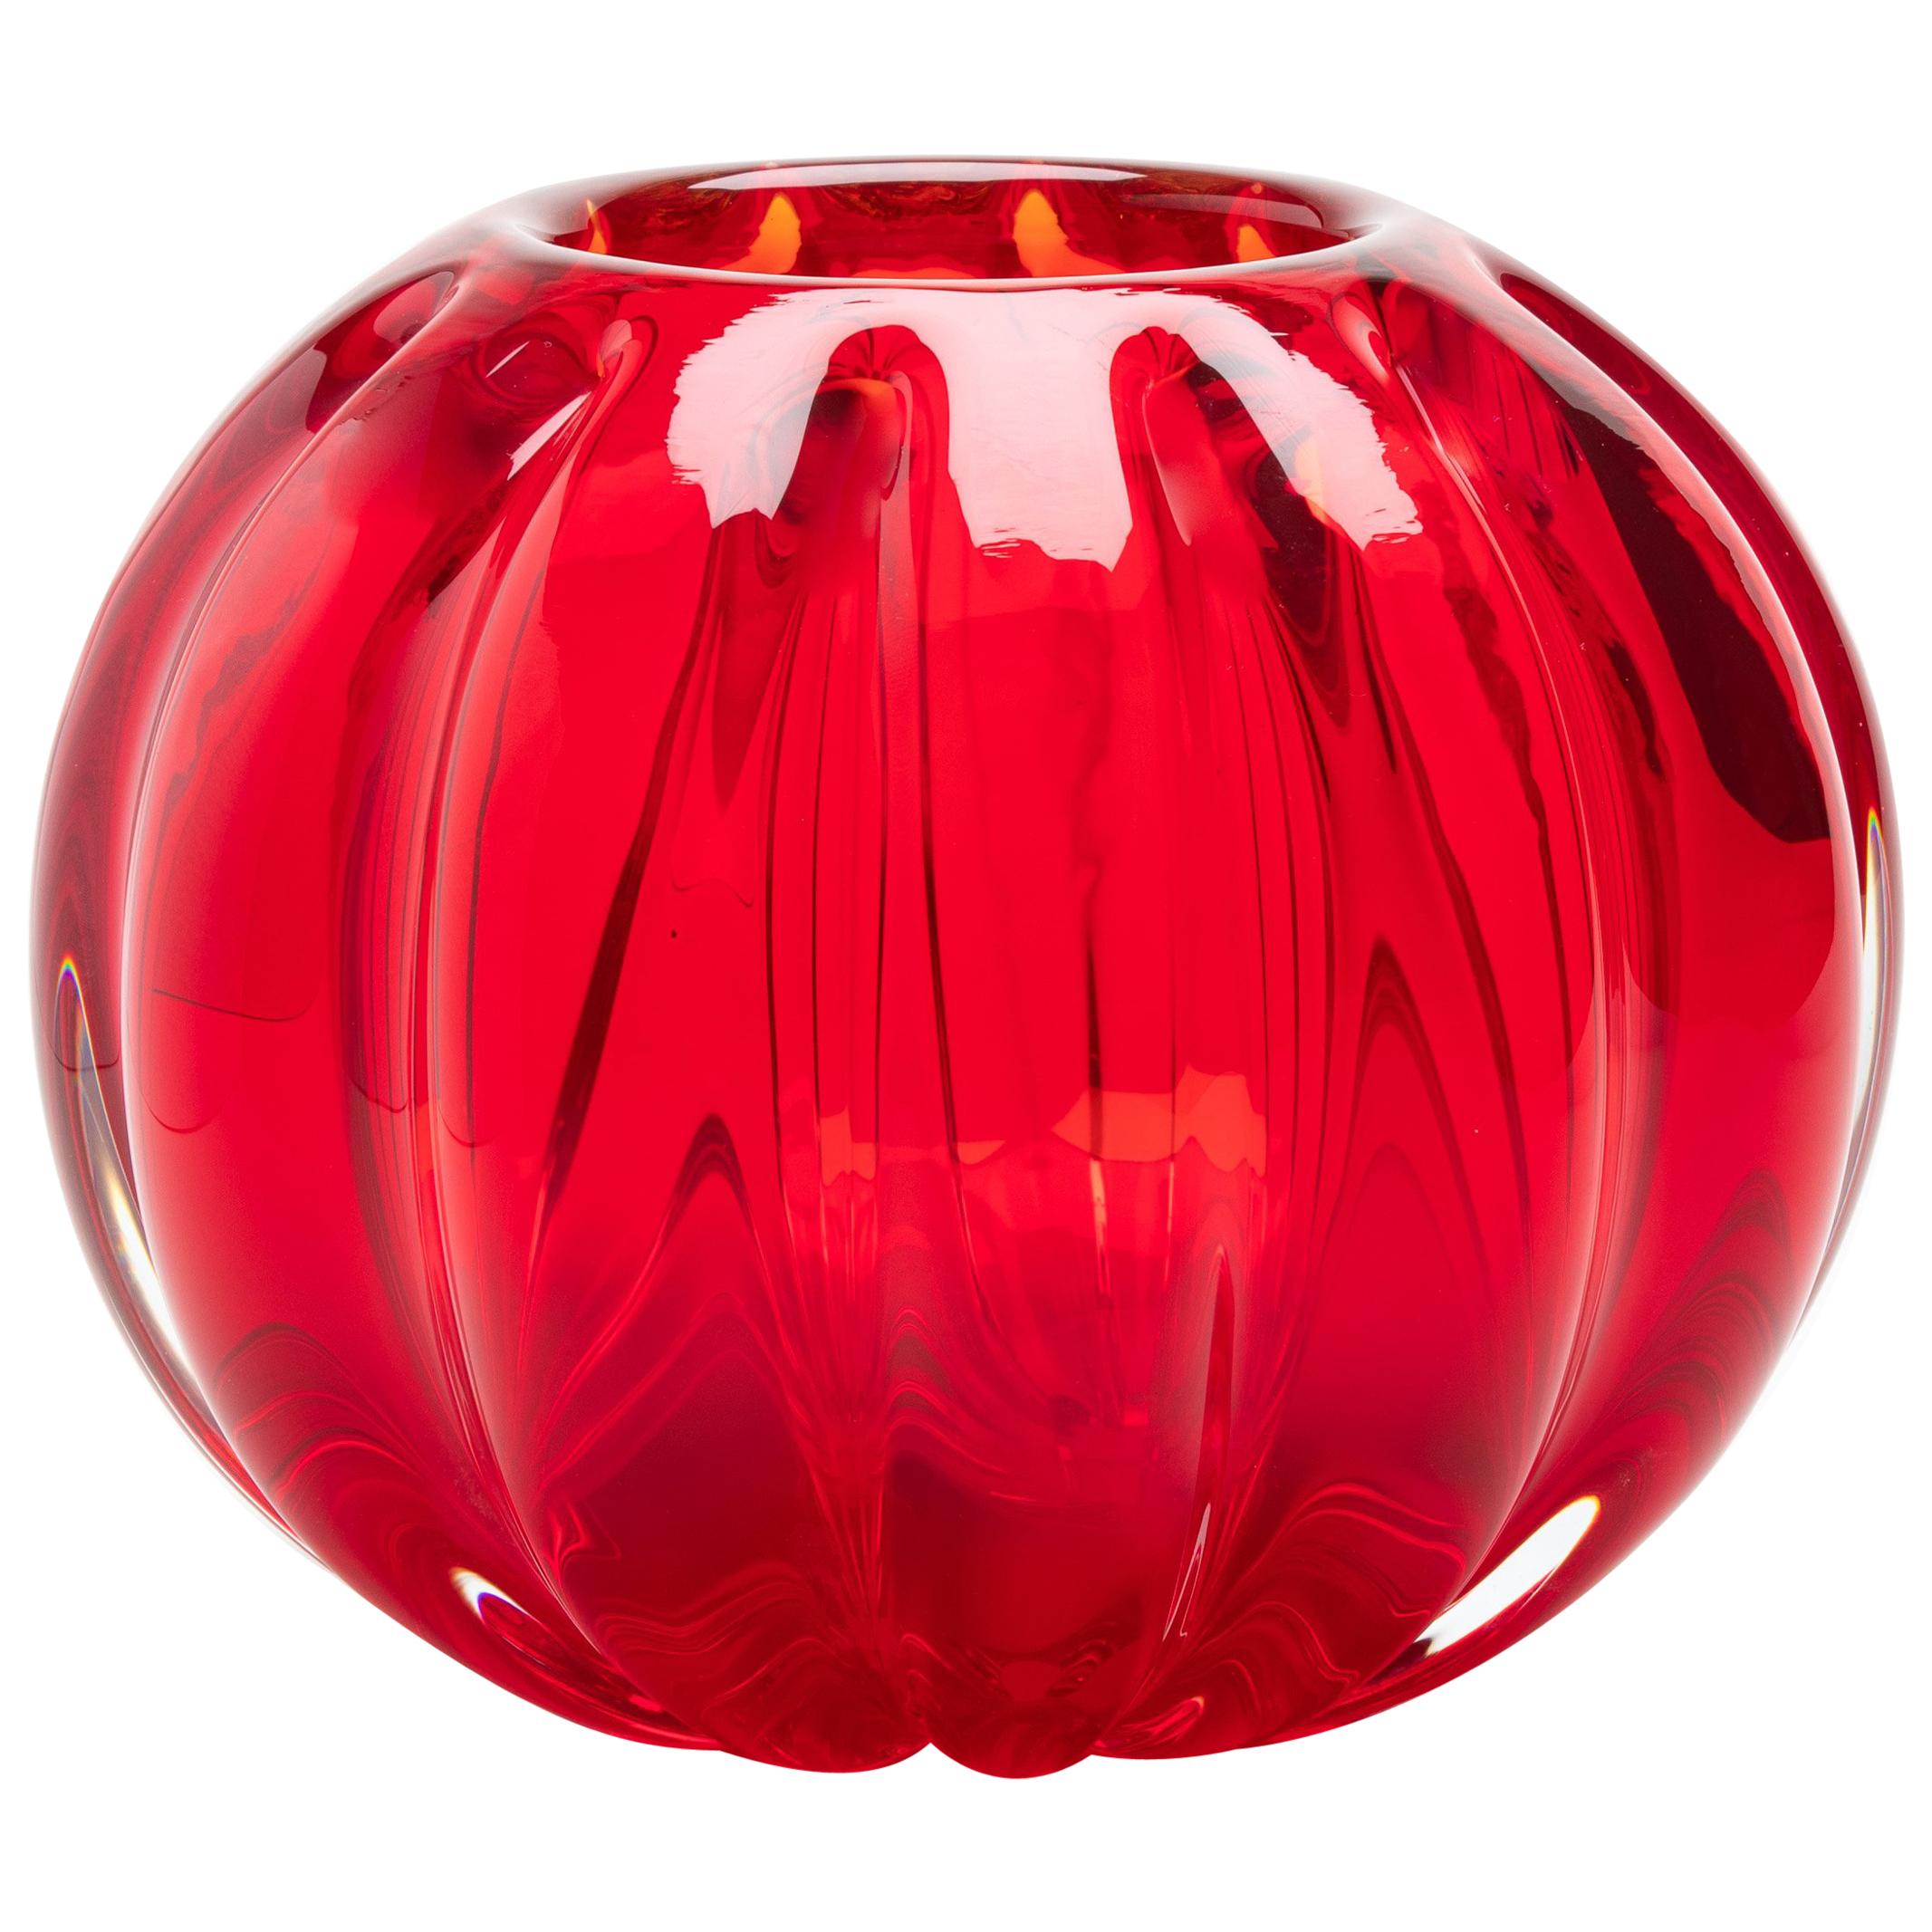 Yali Murano Hand Blown Fiori Bolla Vase Large Red For Sale